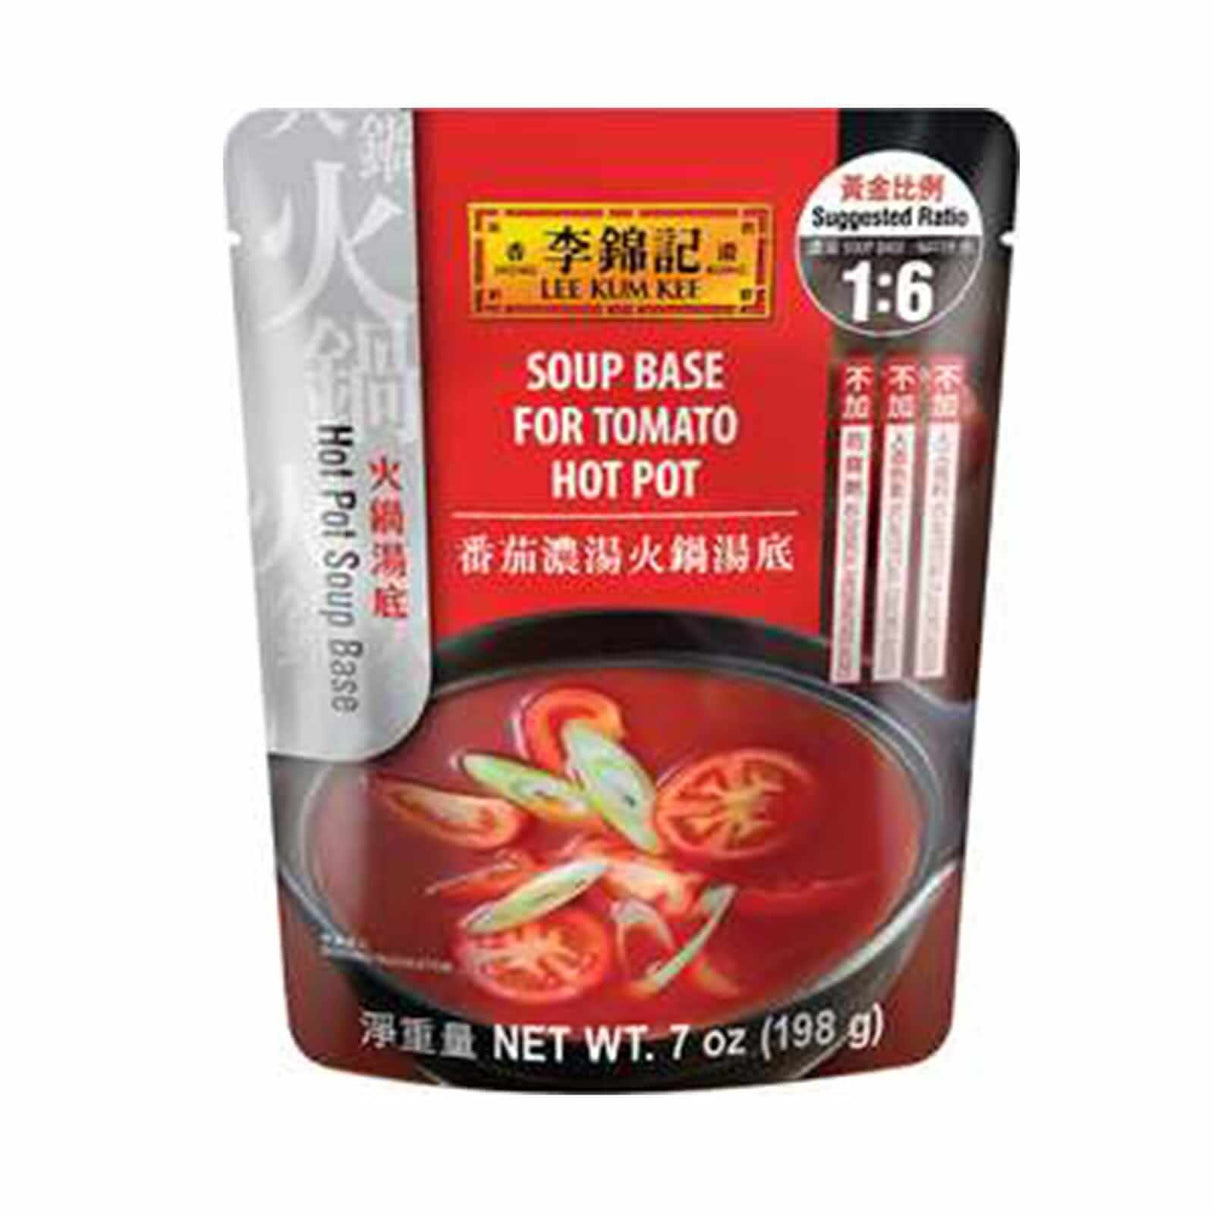 Lee Kum Kee Soup Base For Tomato Hot Pot